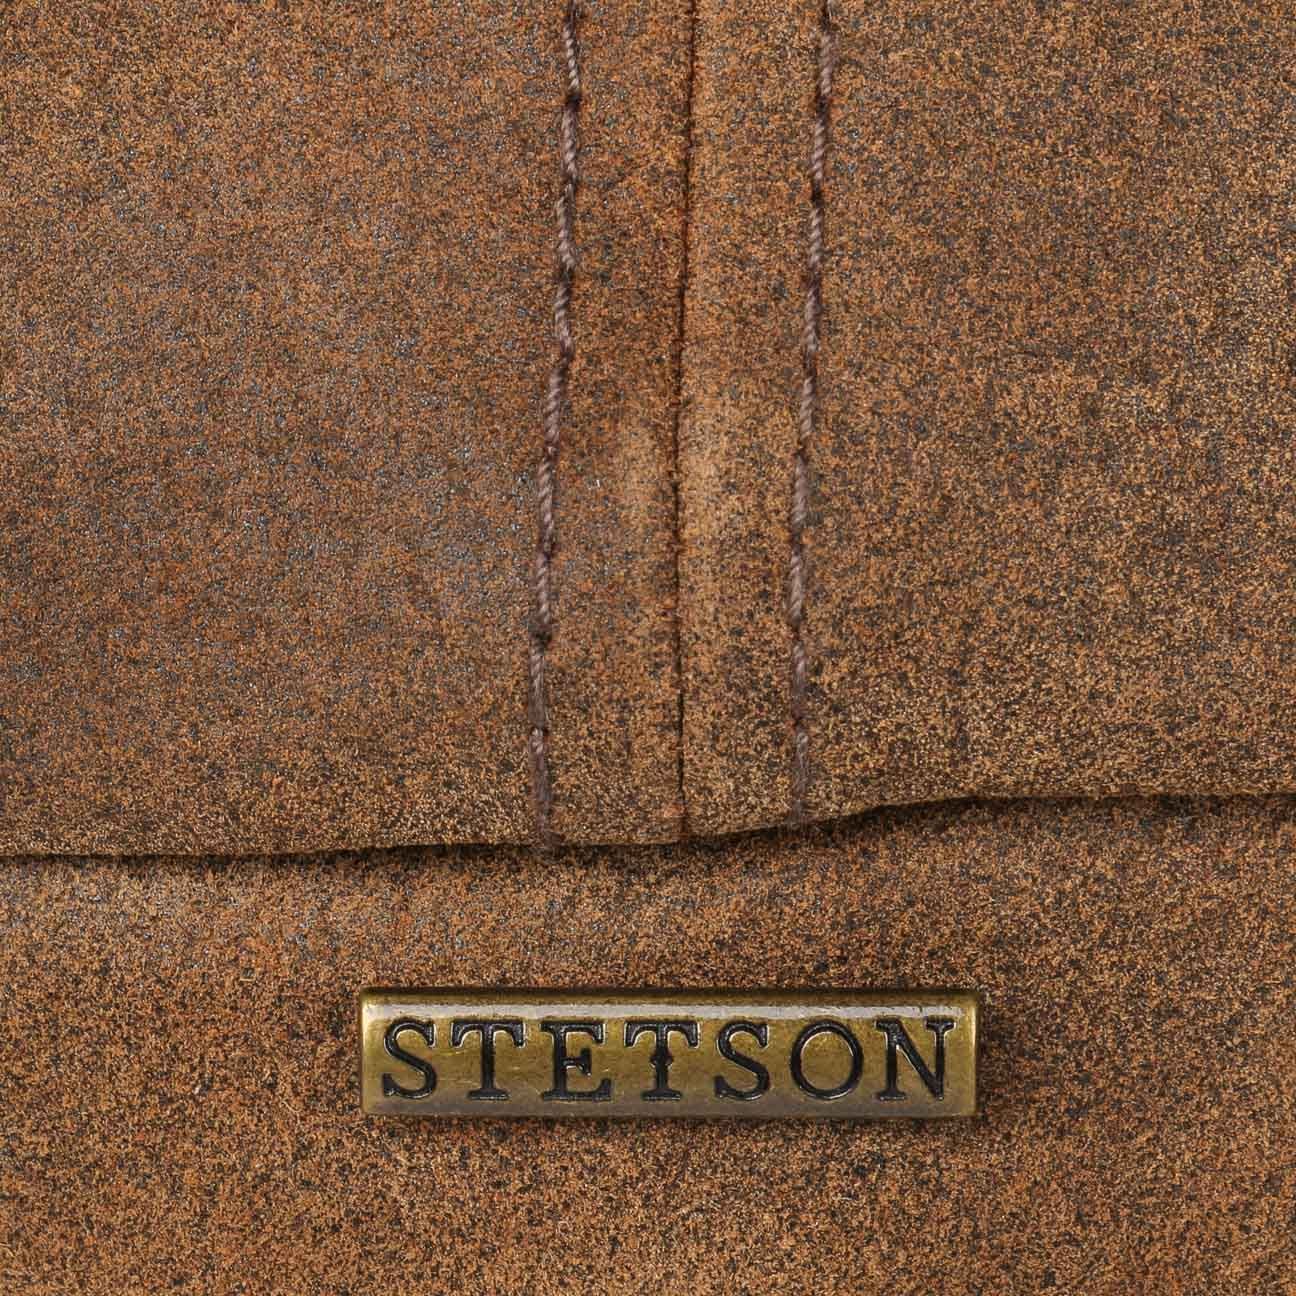 Новая кепка Stetson из Кожи размер S 54-55 см